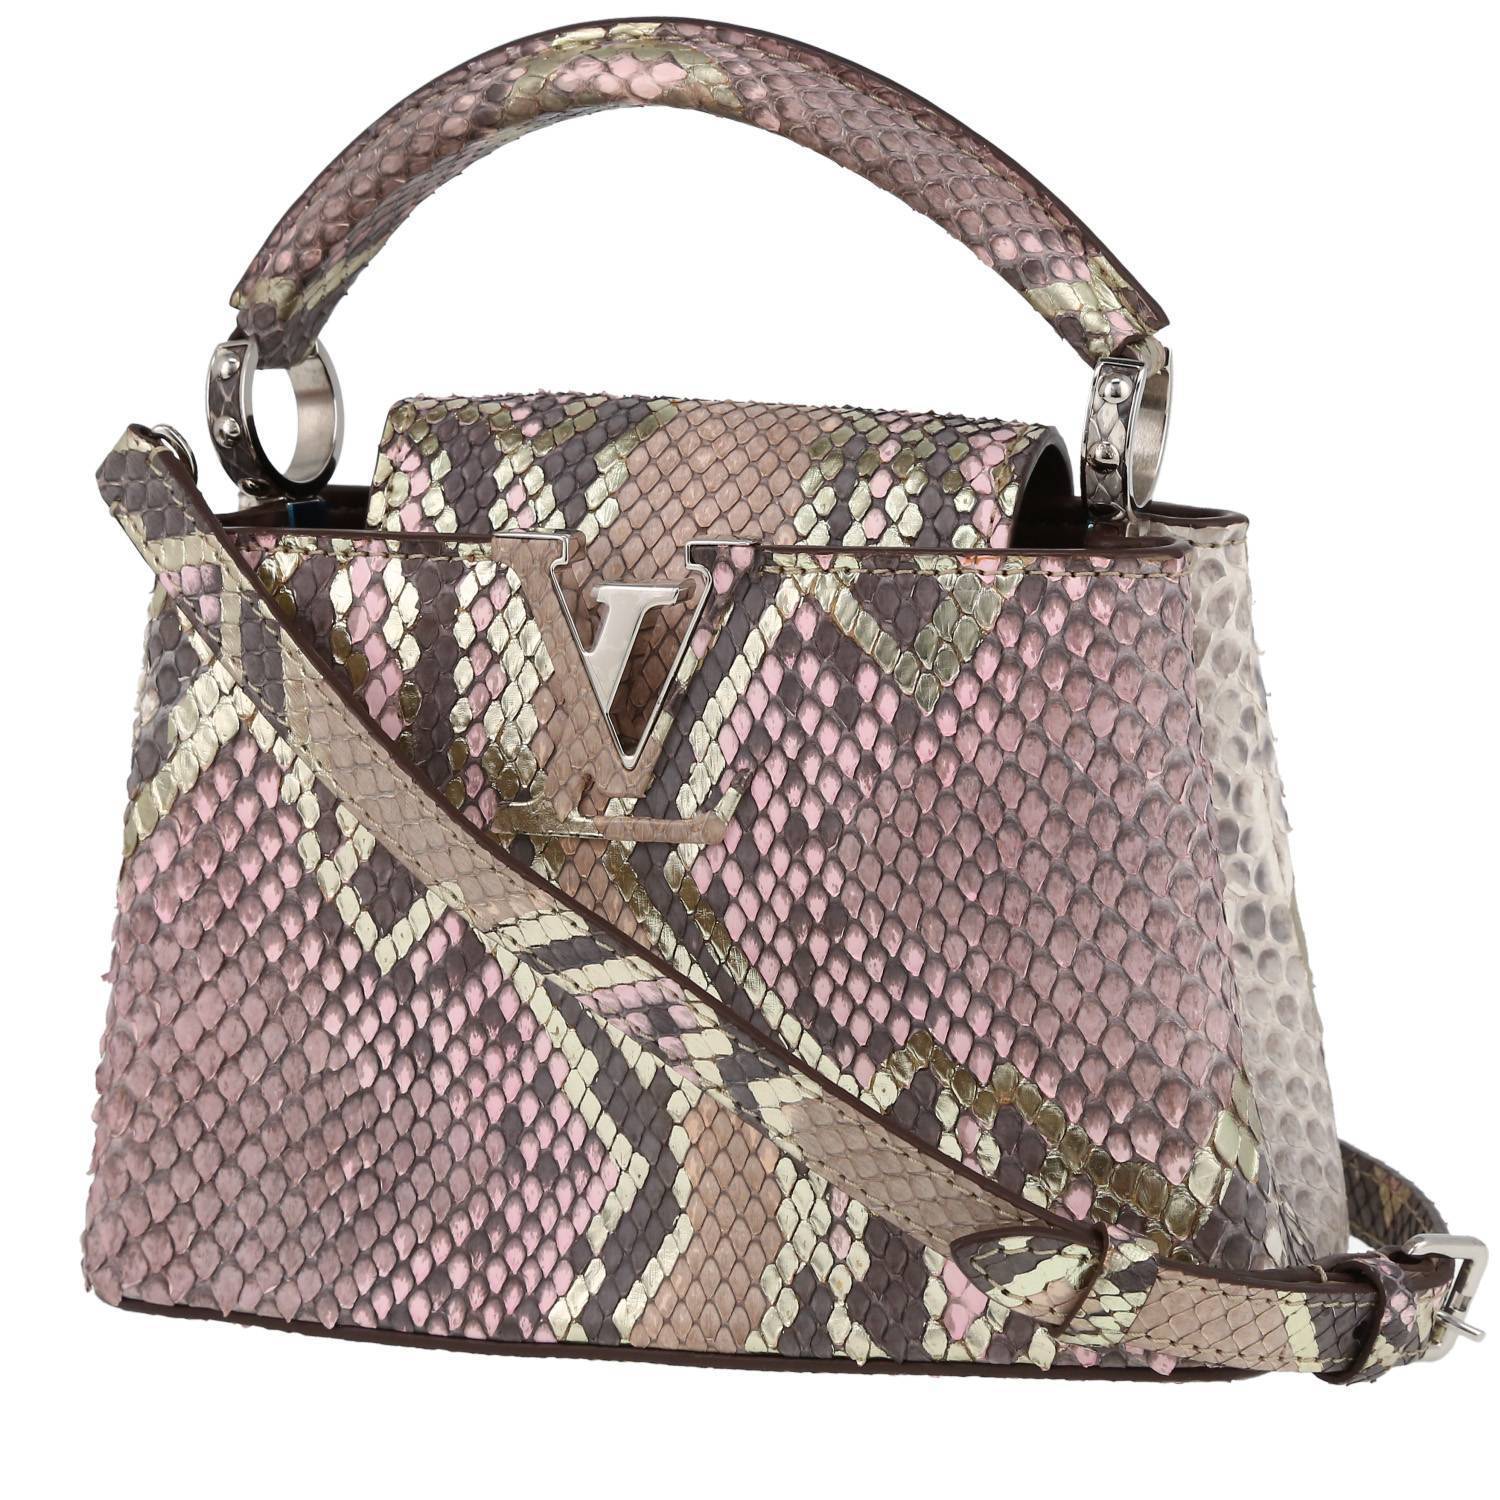 Louis Vuitton Capucines Mini Shoulder Bag in Pink, Beige and Grey